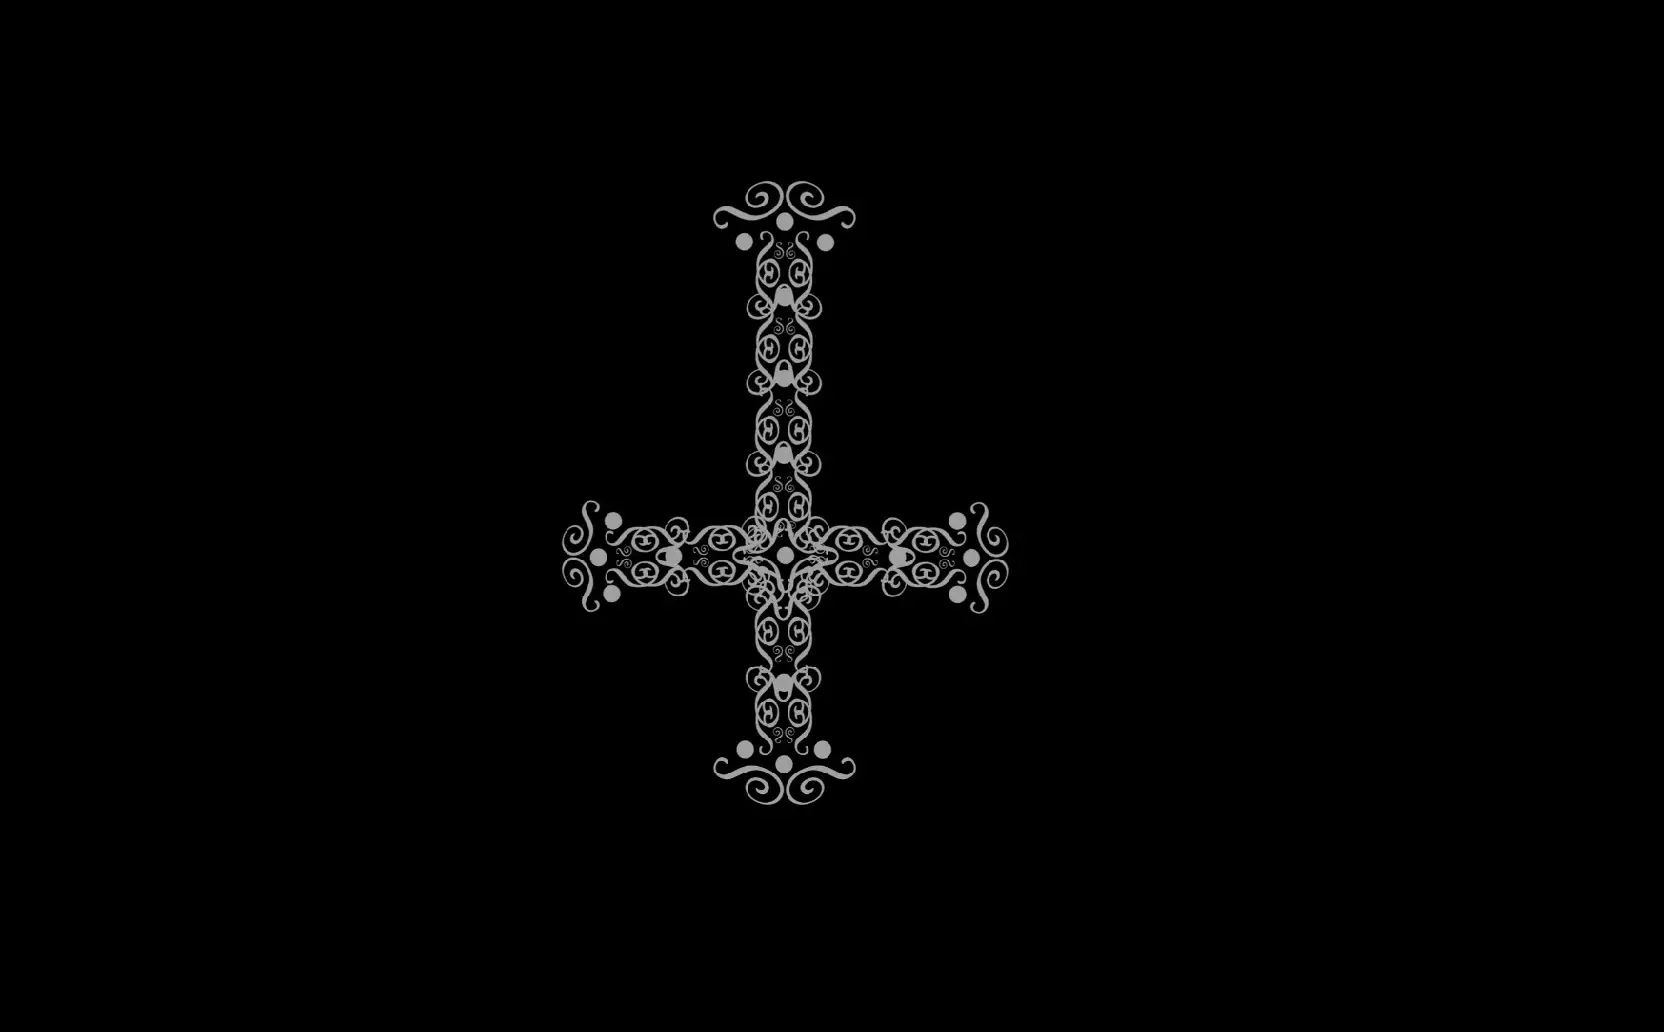 símbolo cruz invertida